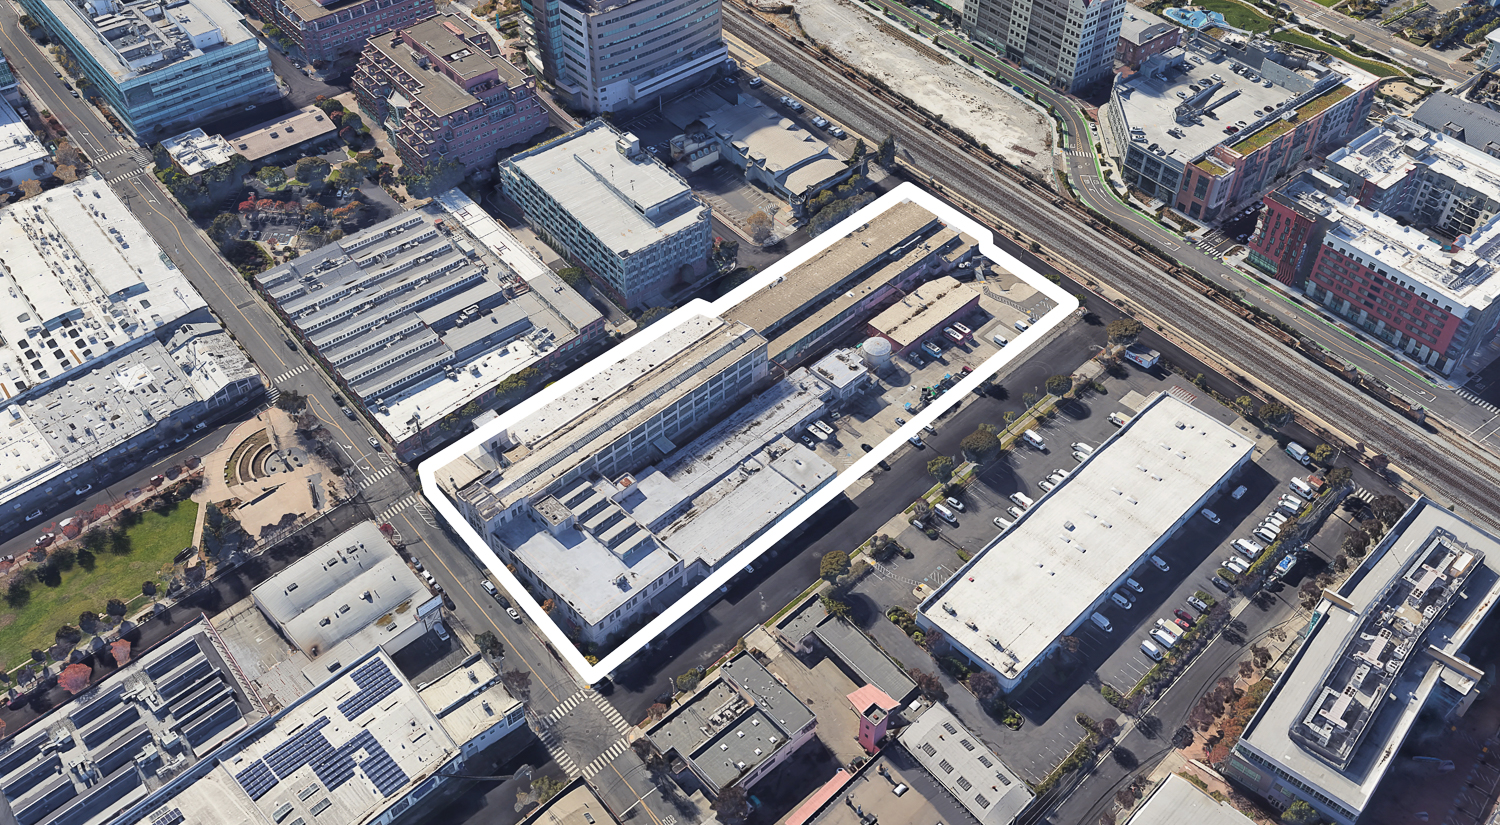 1580 62nd Street overview, image via Google Satellite